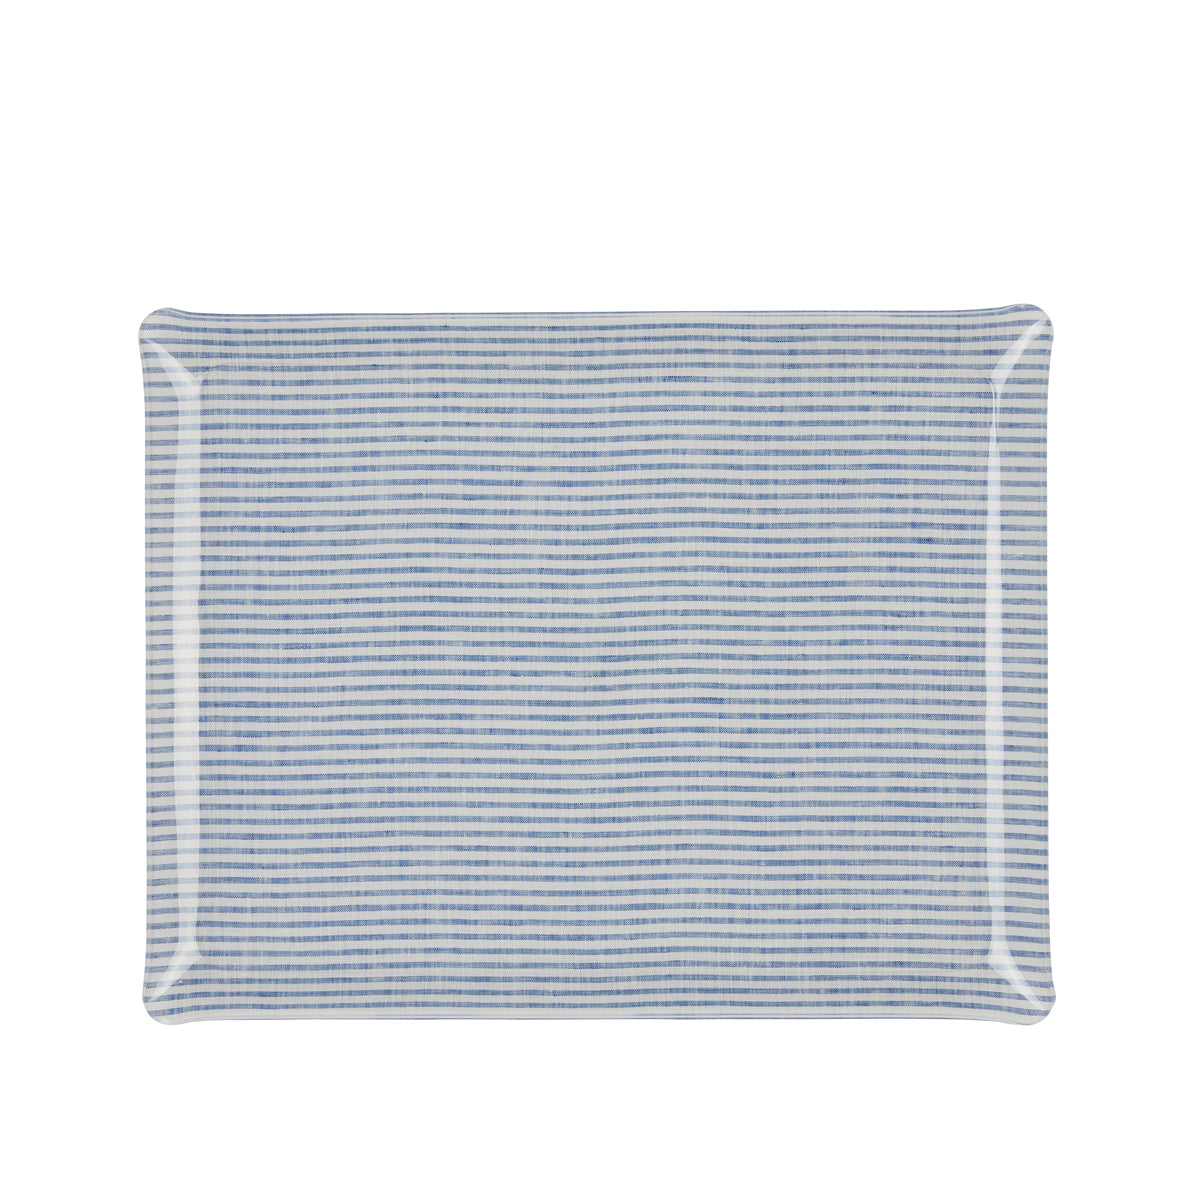 Fabric Tray Large 46X36 - Stripe Blue + White